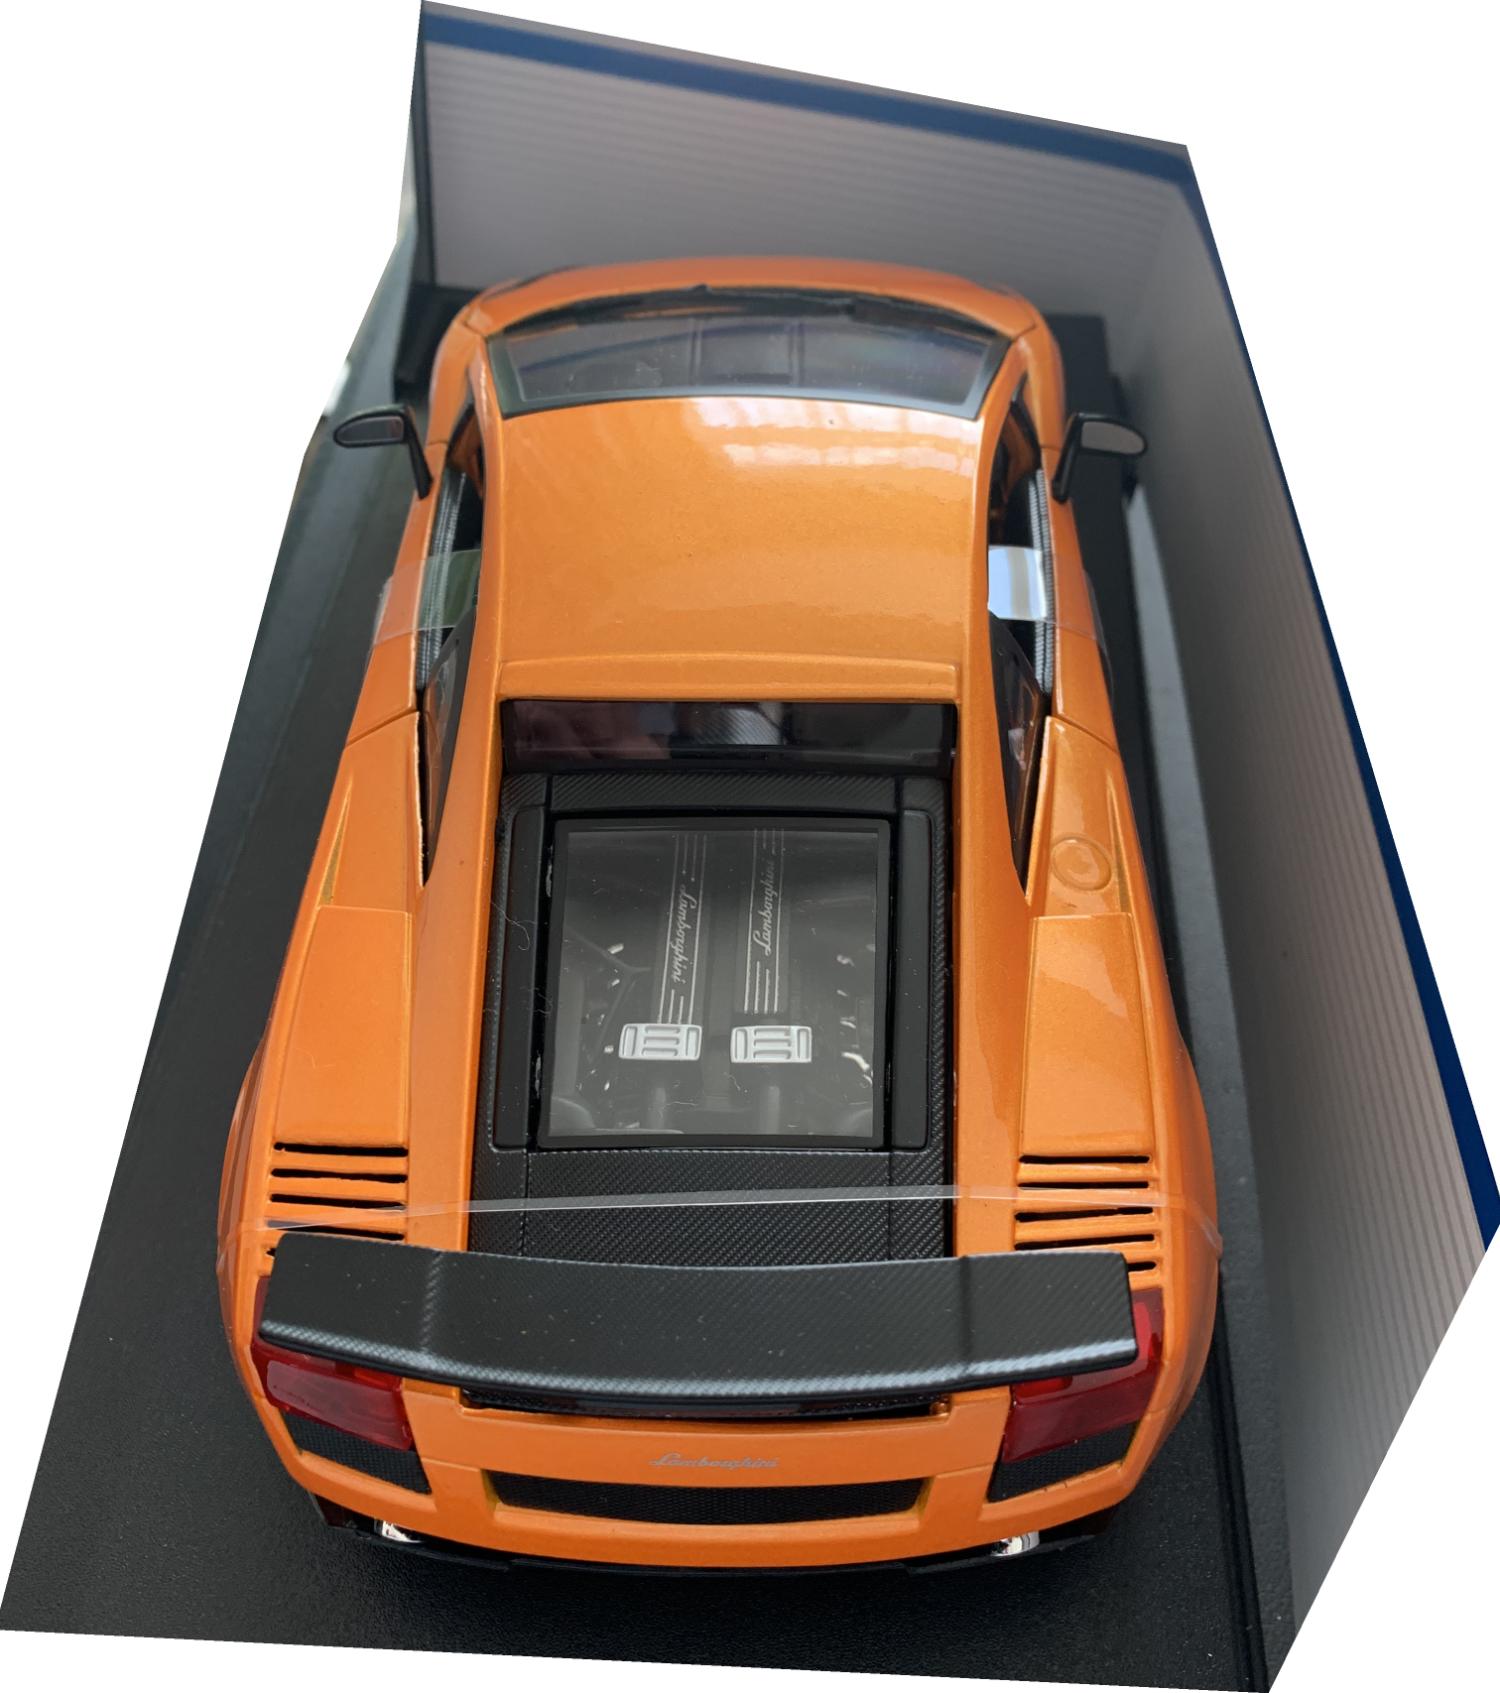 Lamborghini Gallardo Superleggera 2007 in orange 1:18 scale model from Maisto